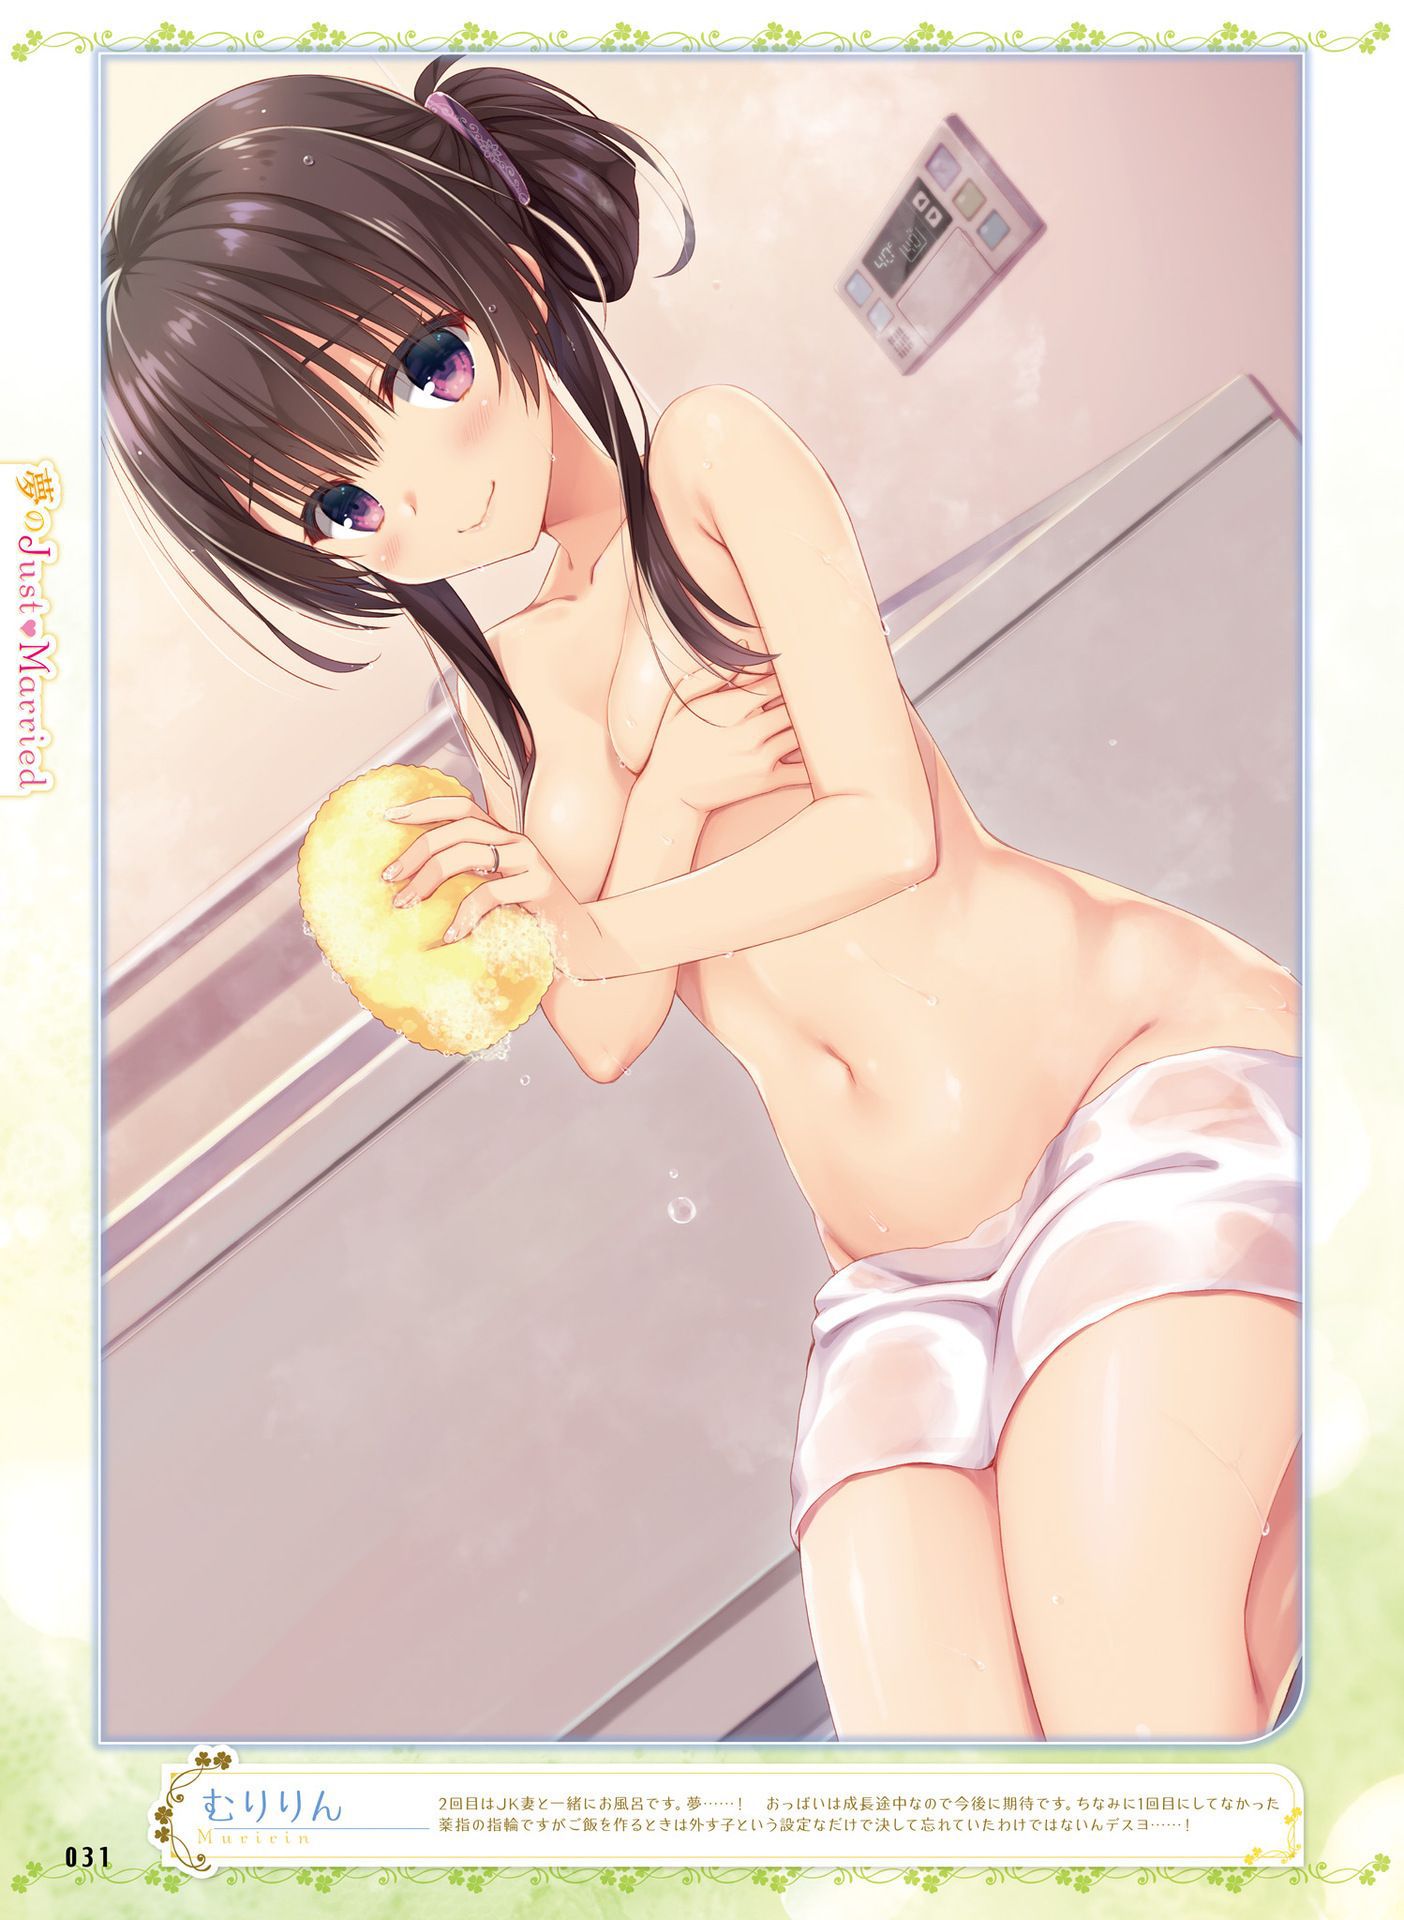 [Secondary erotic] erotic image of a girl exposing a body in the bath [50 photos] 27